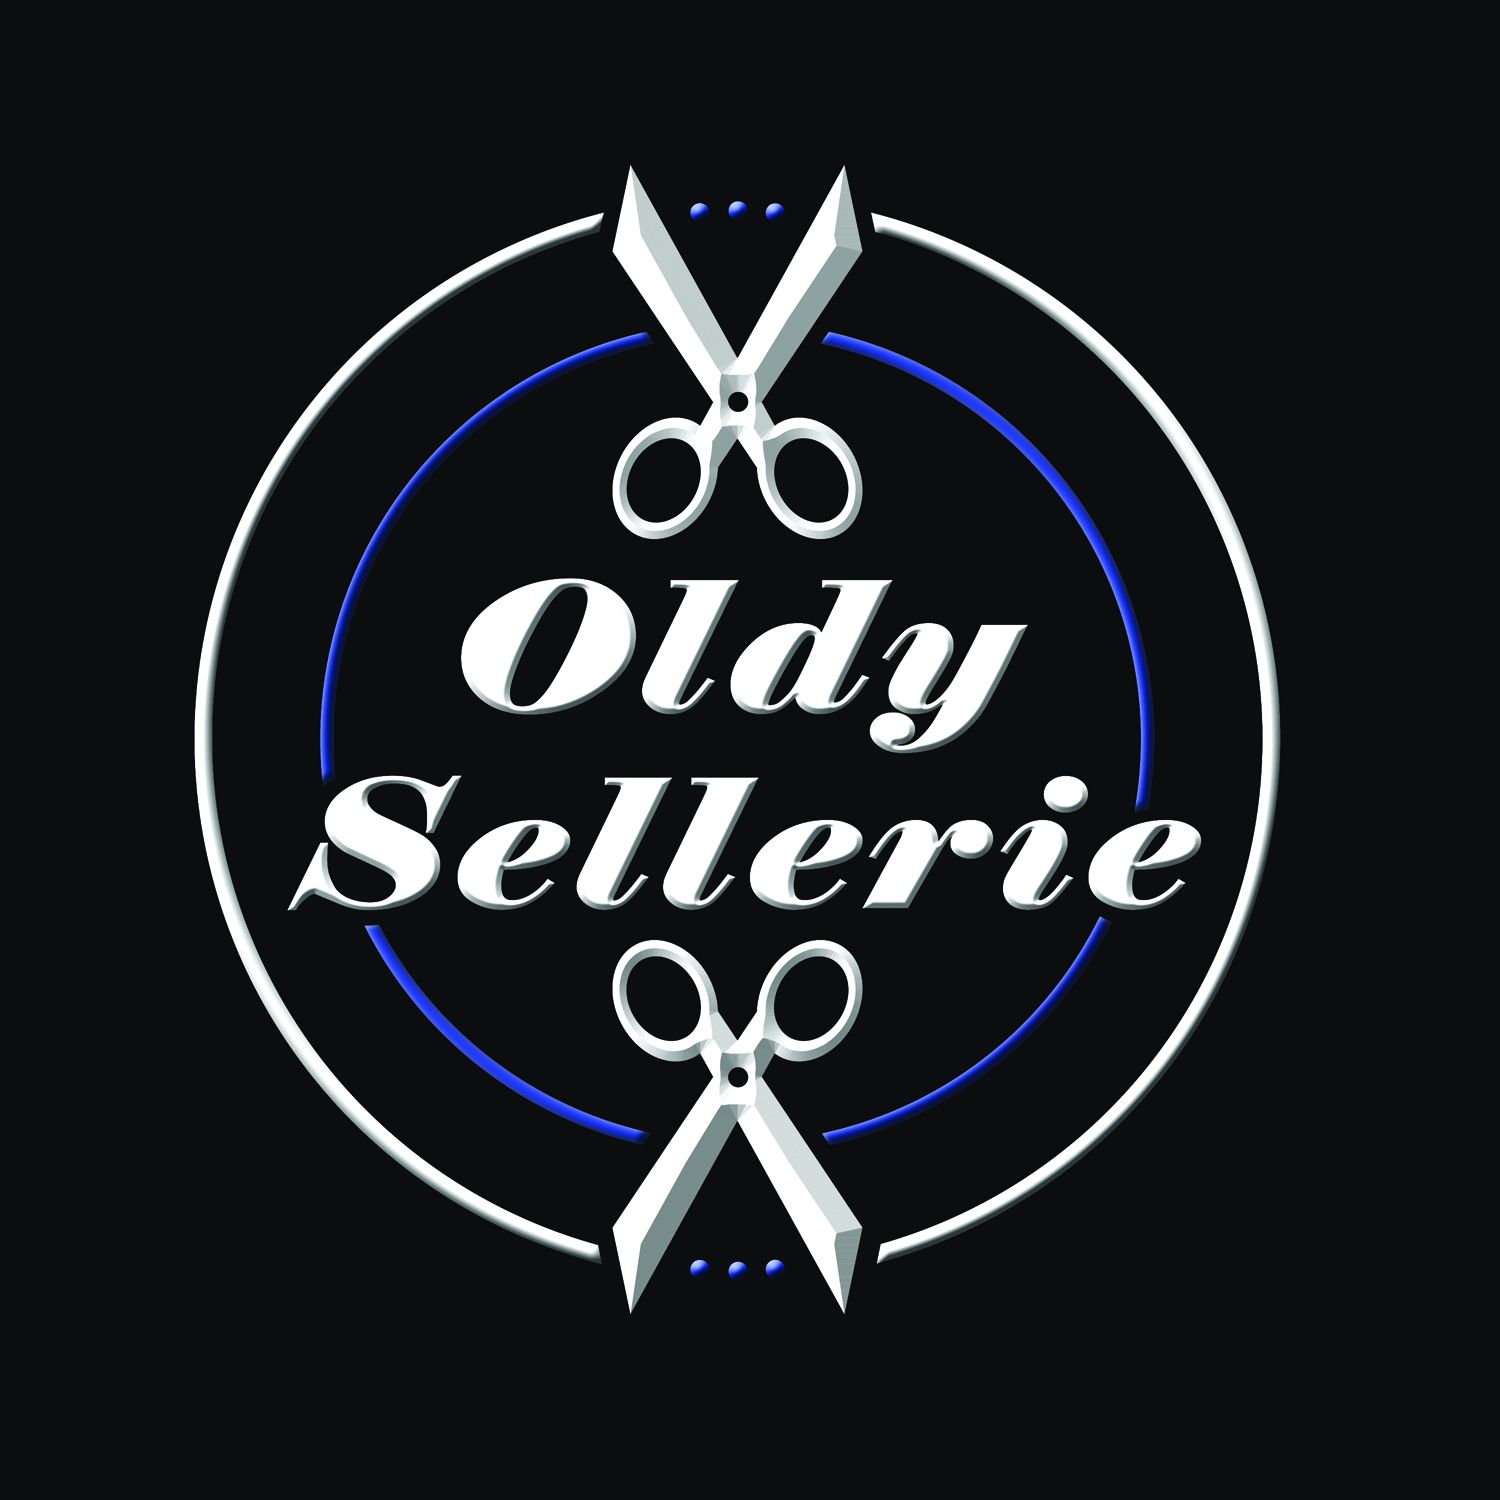 Oldy Sellerie 